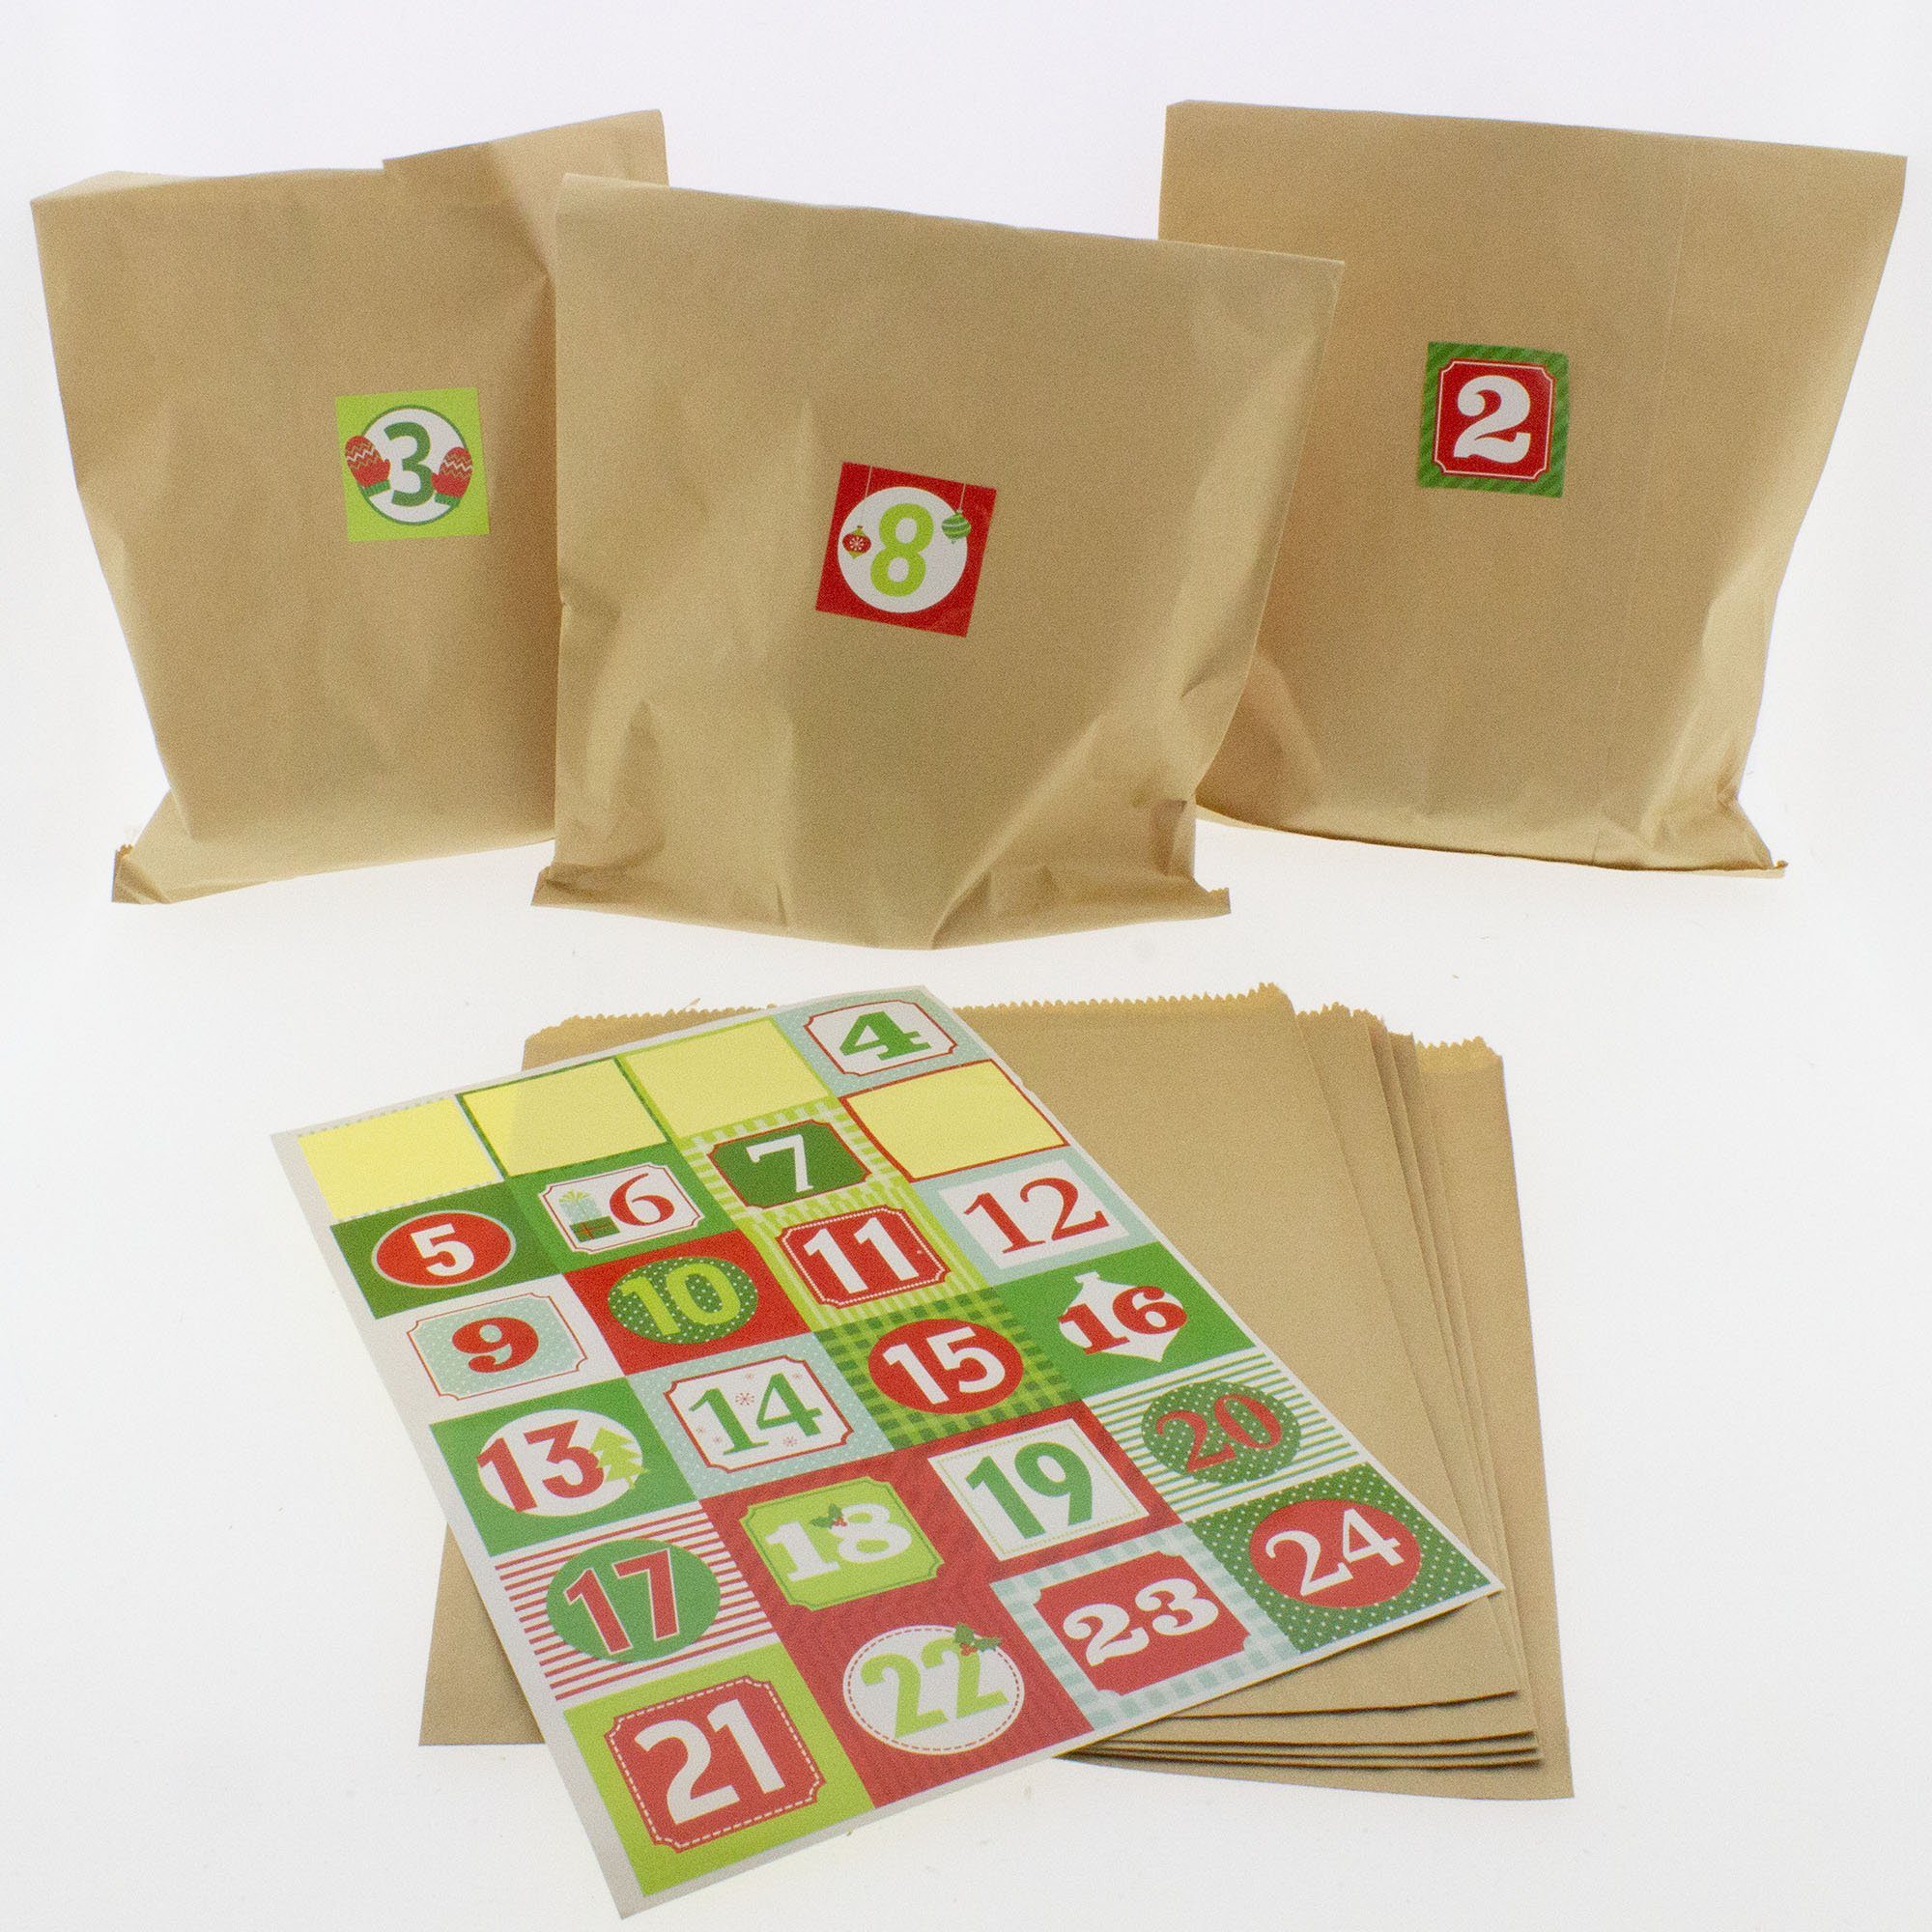 Annastore befüllbarer Adventskalender Adventskalender DIY zum Befüllen - 24 x Papierbeutel, 24 Zahlensticker, Adventskalender zum selbst Befüllen rot-grün